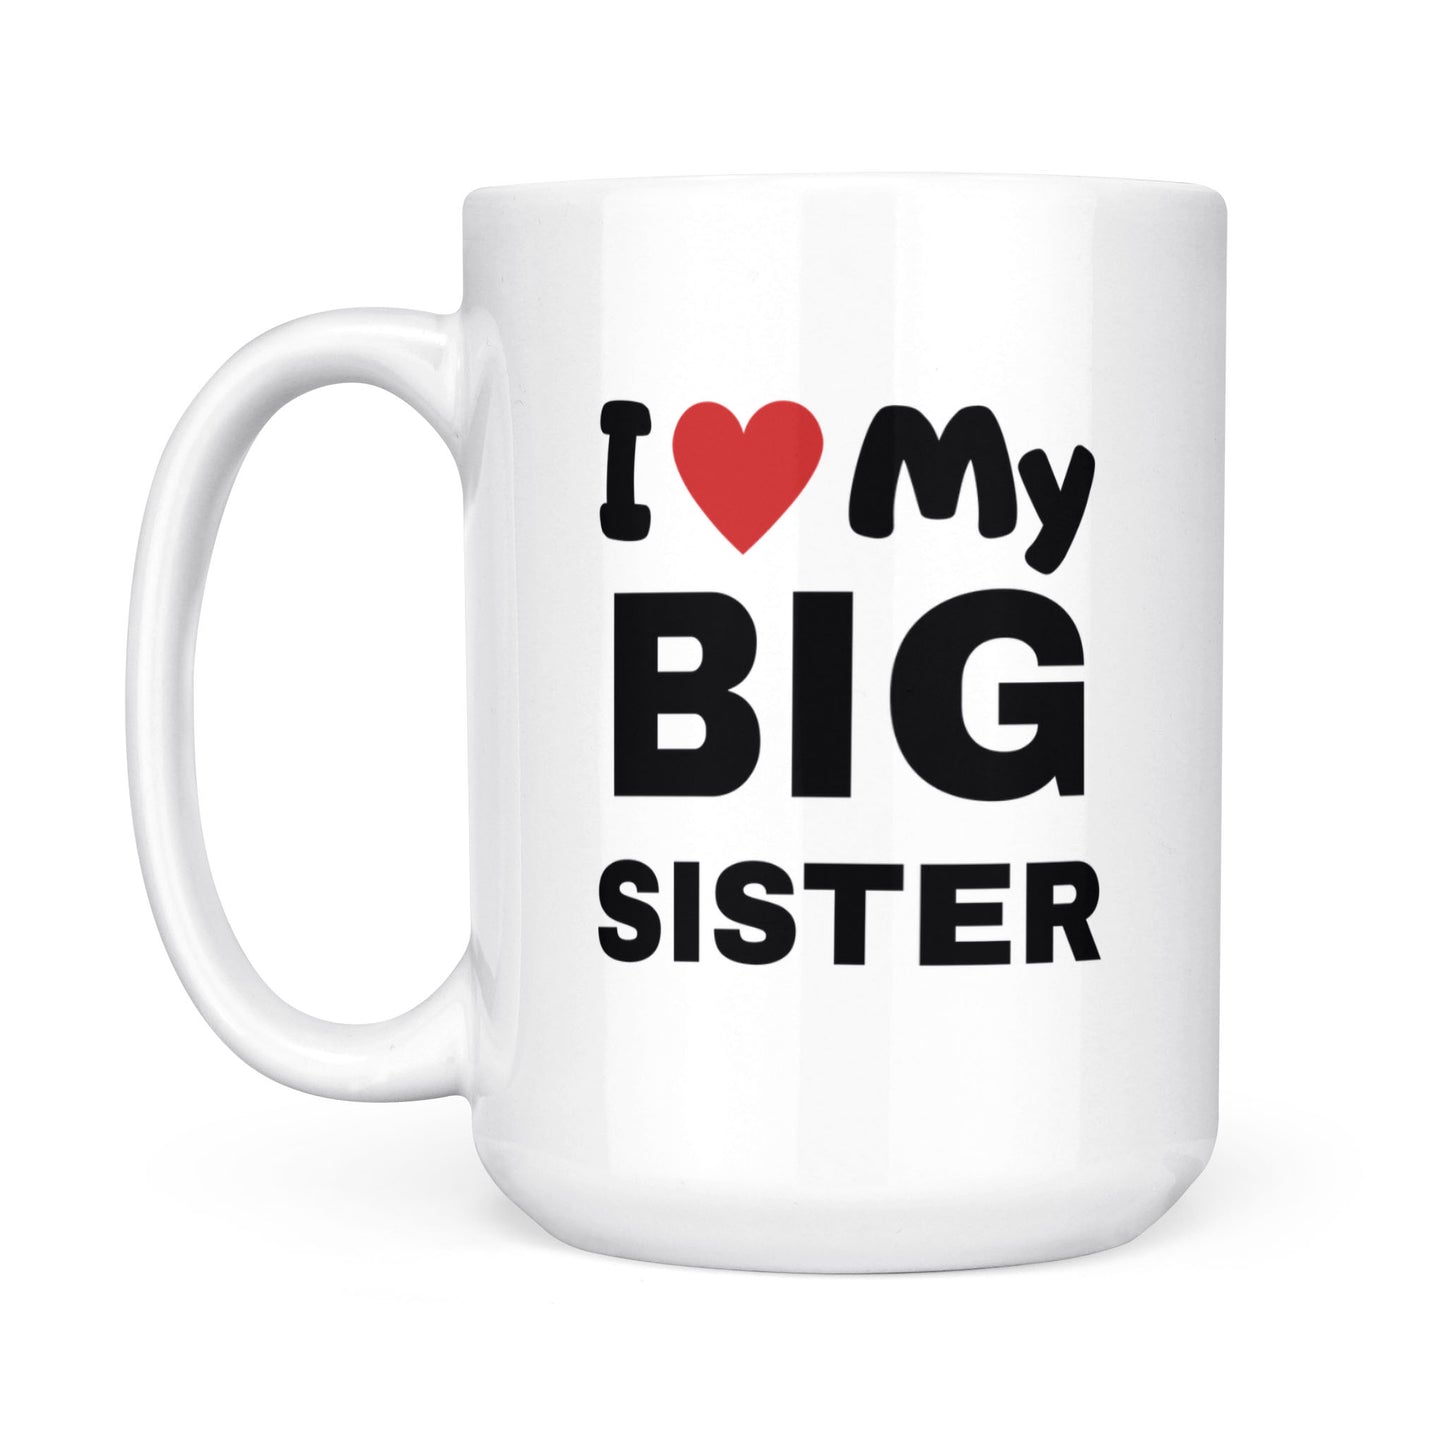 I Love My Big Sister Mugs